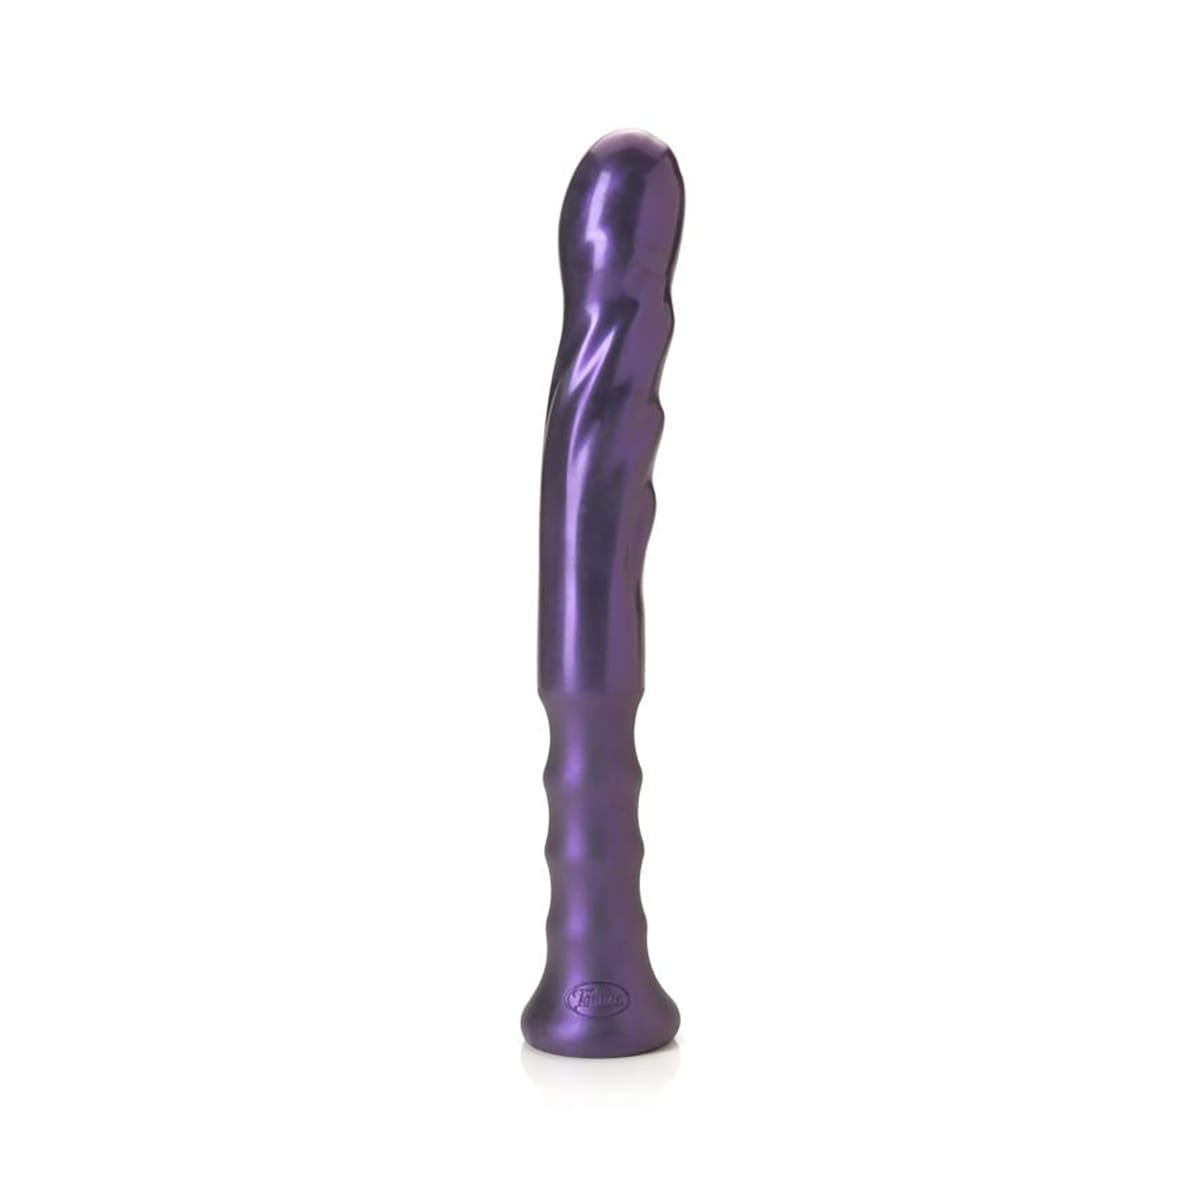 Buy Tantus Goddess Handle Dildo  Purple BAG  long and  thick dildo made by Tantus.